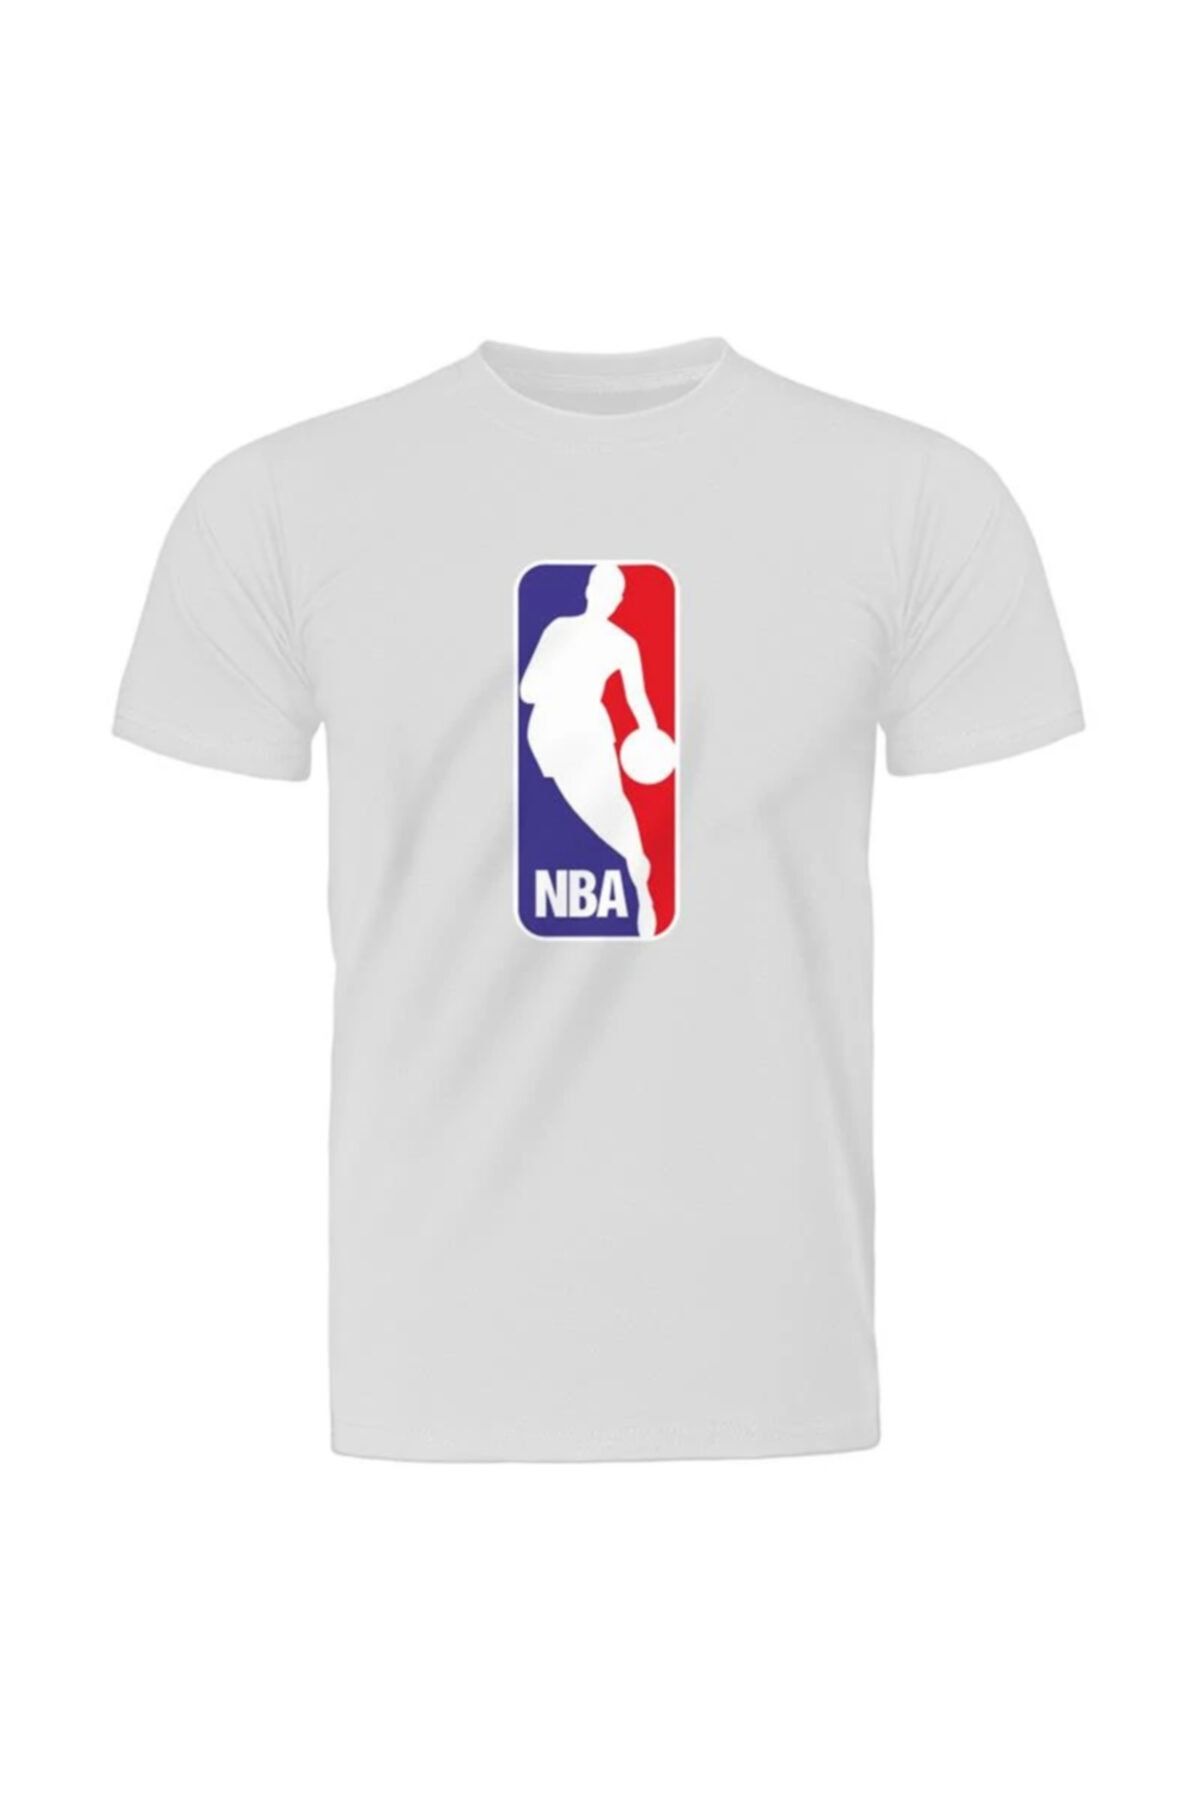 Fandomya Casual NBA Logo Beyaz Tişört - ST153CSL1265